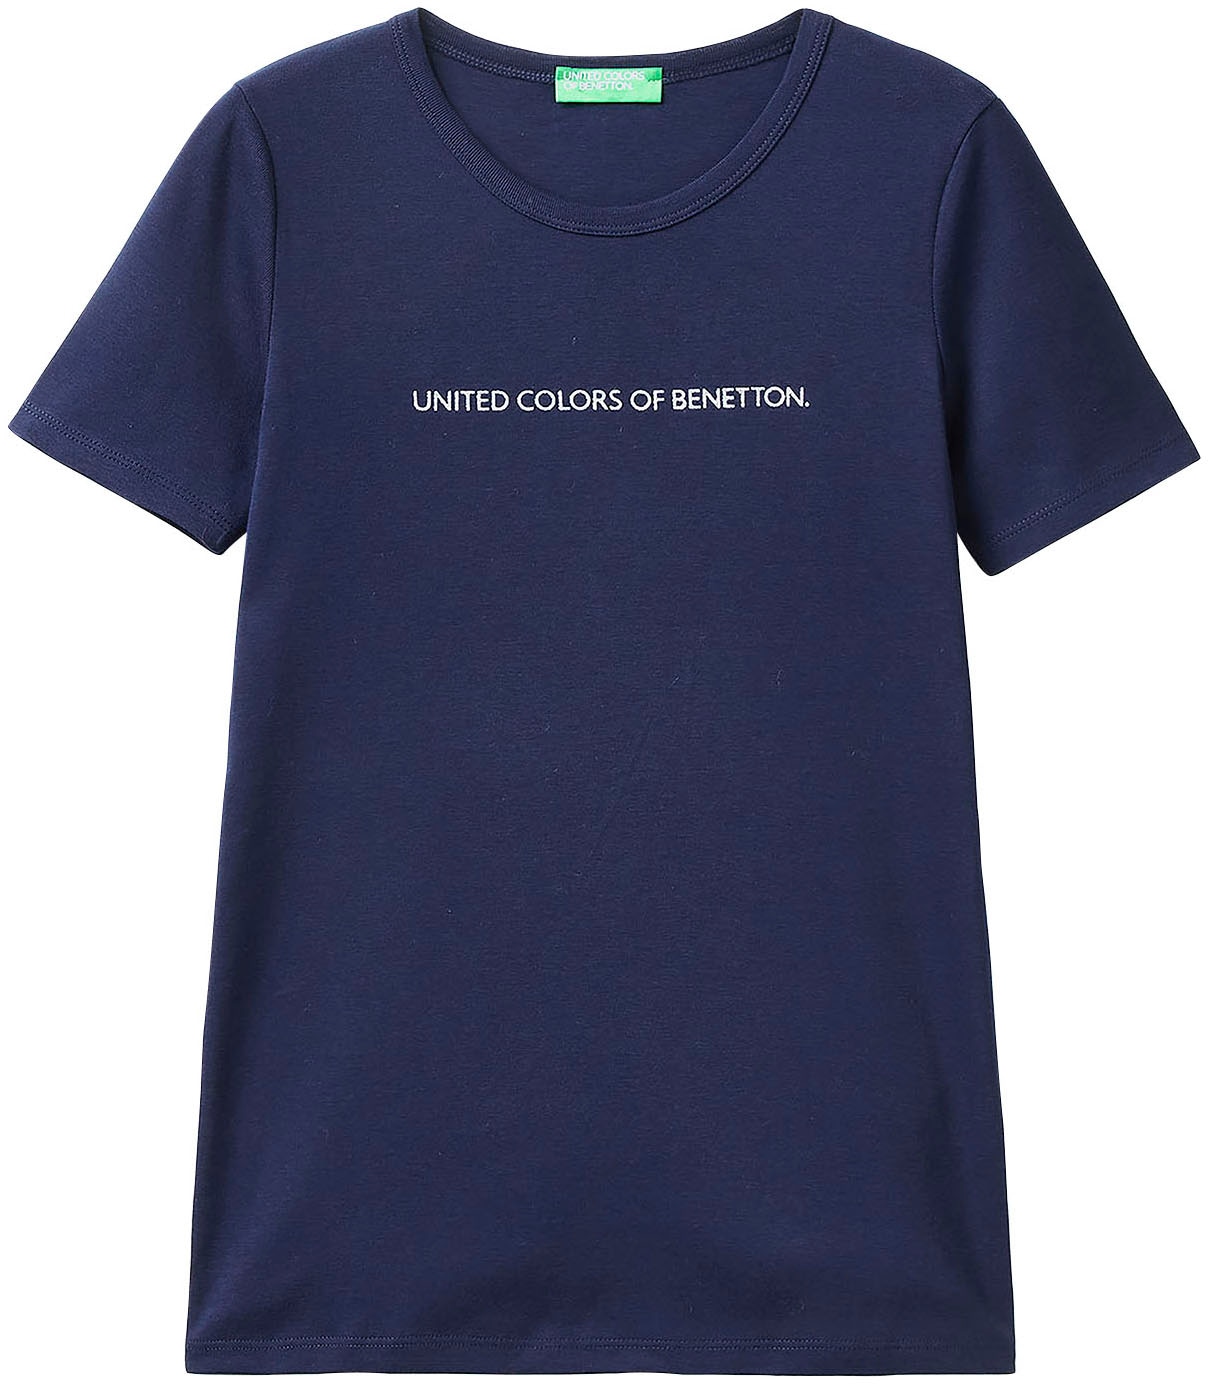 bei Druck (1 ♕ tlg.), Benetton United glitzerndem mit T-Shirt, of Colors